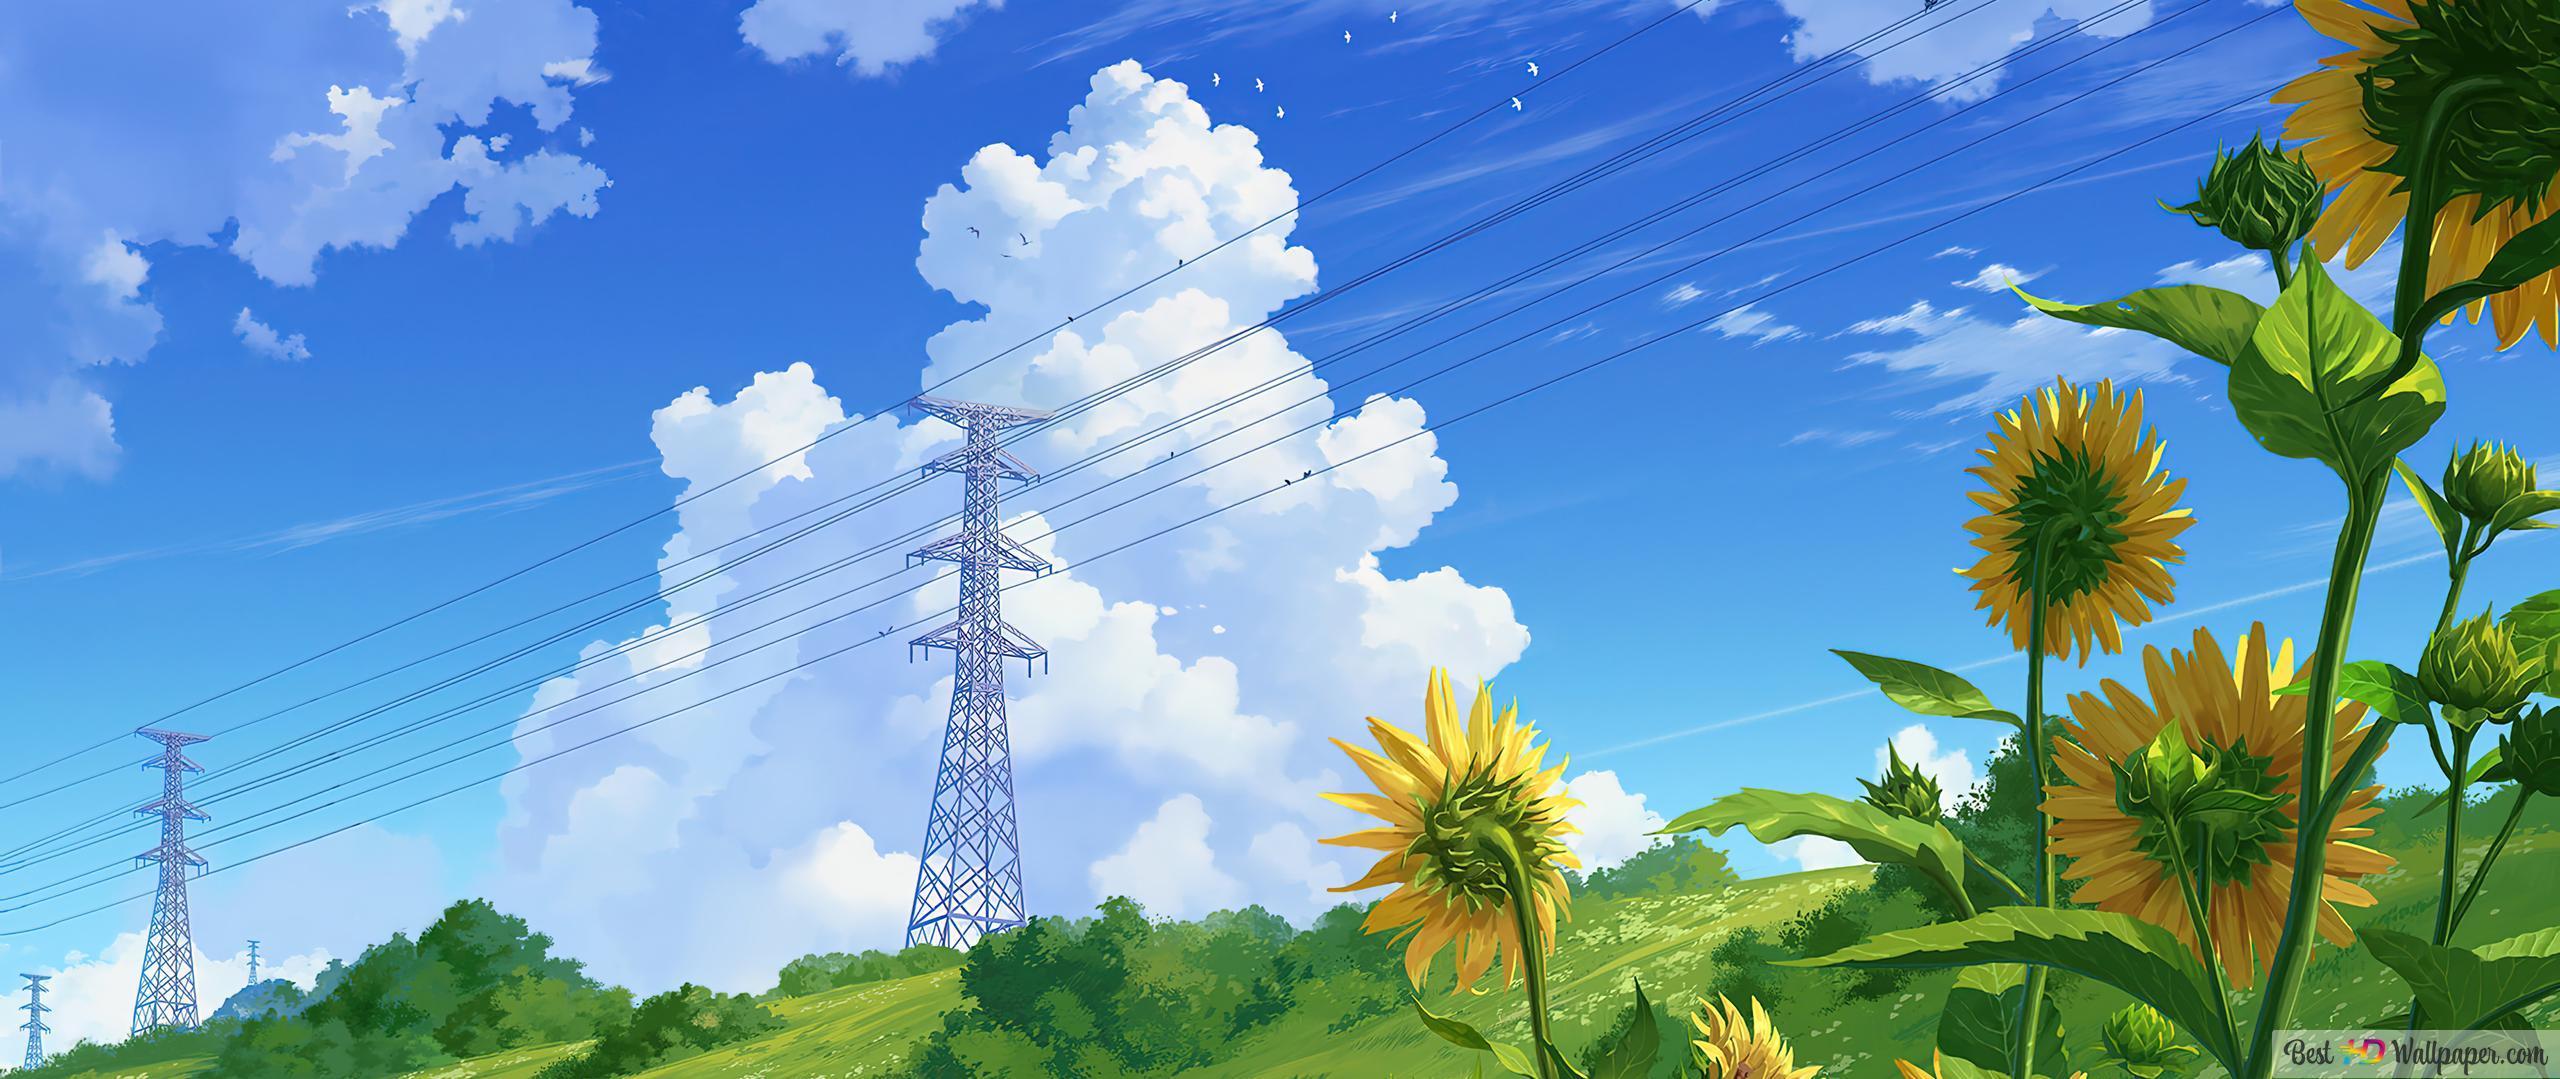 Anime Summer Season 4K wallpaper download